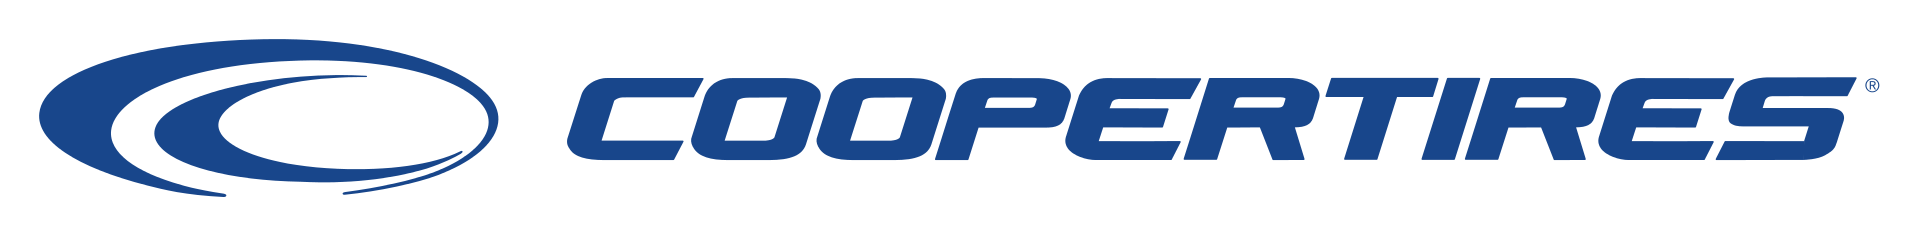 Cooper Tire Brand Logo